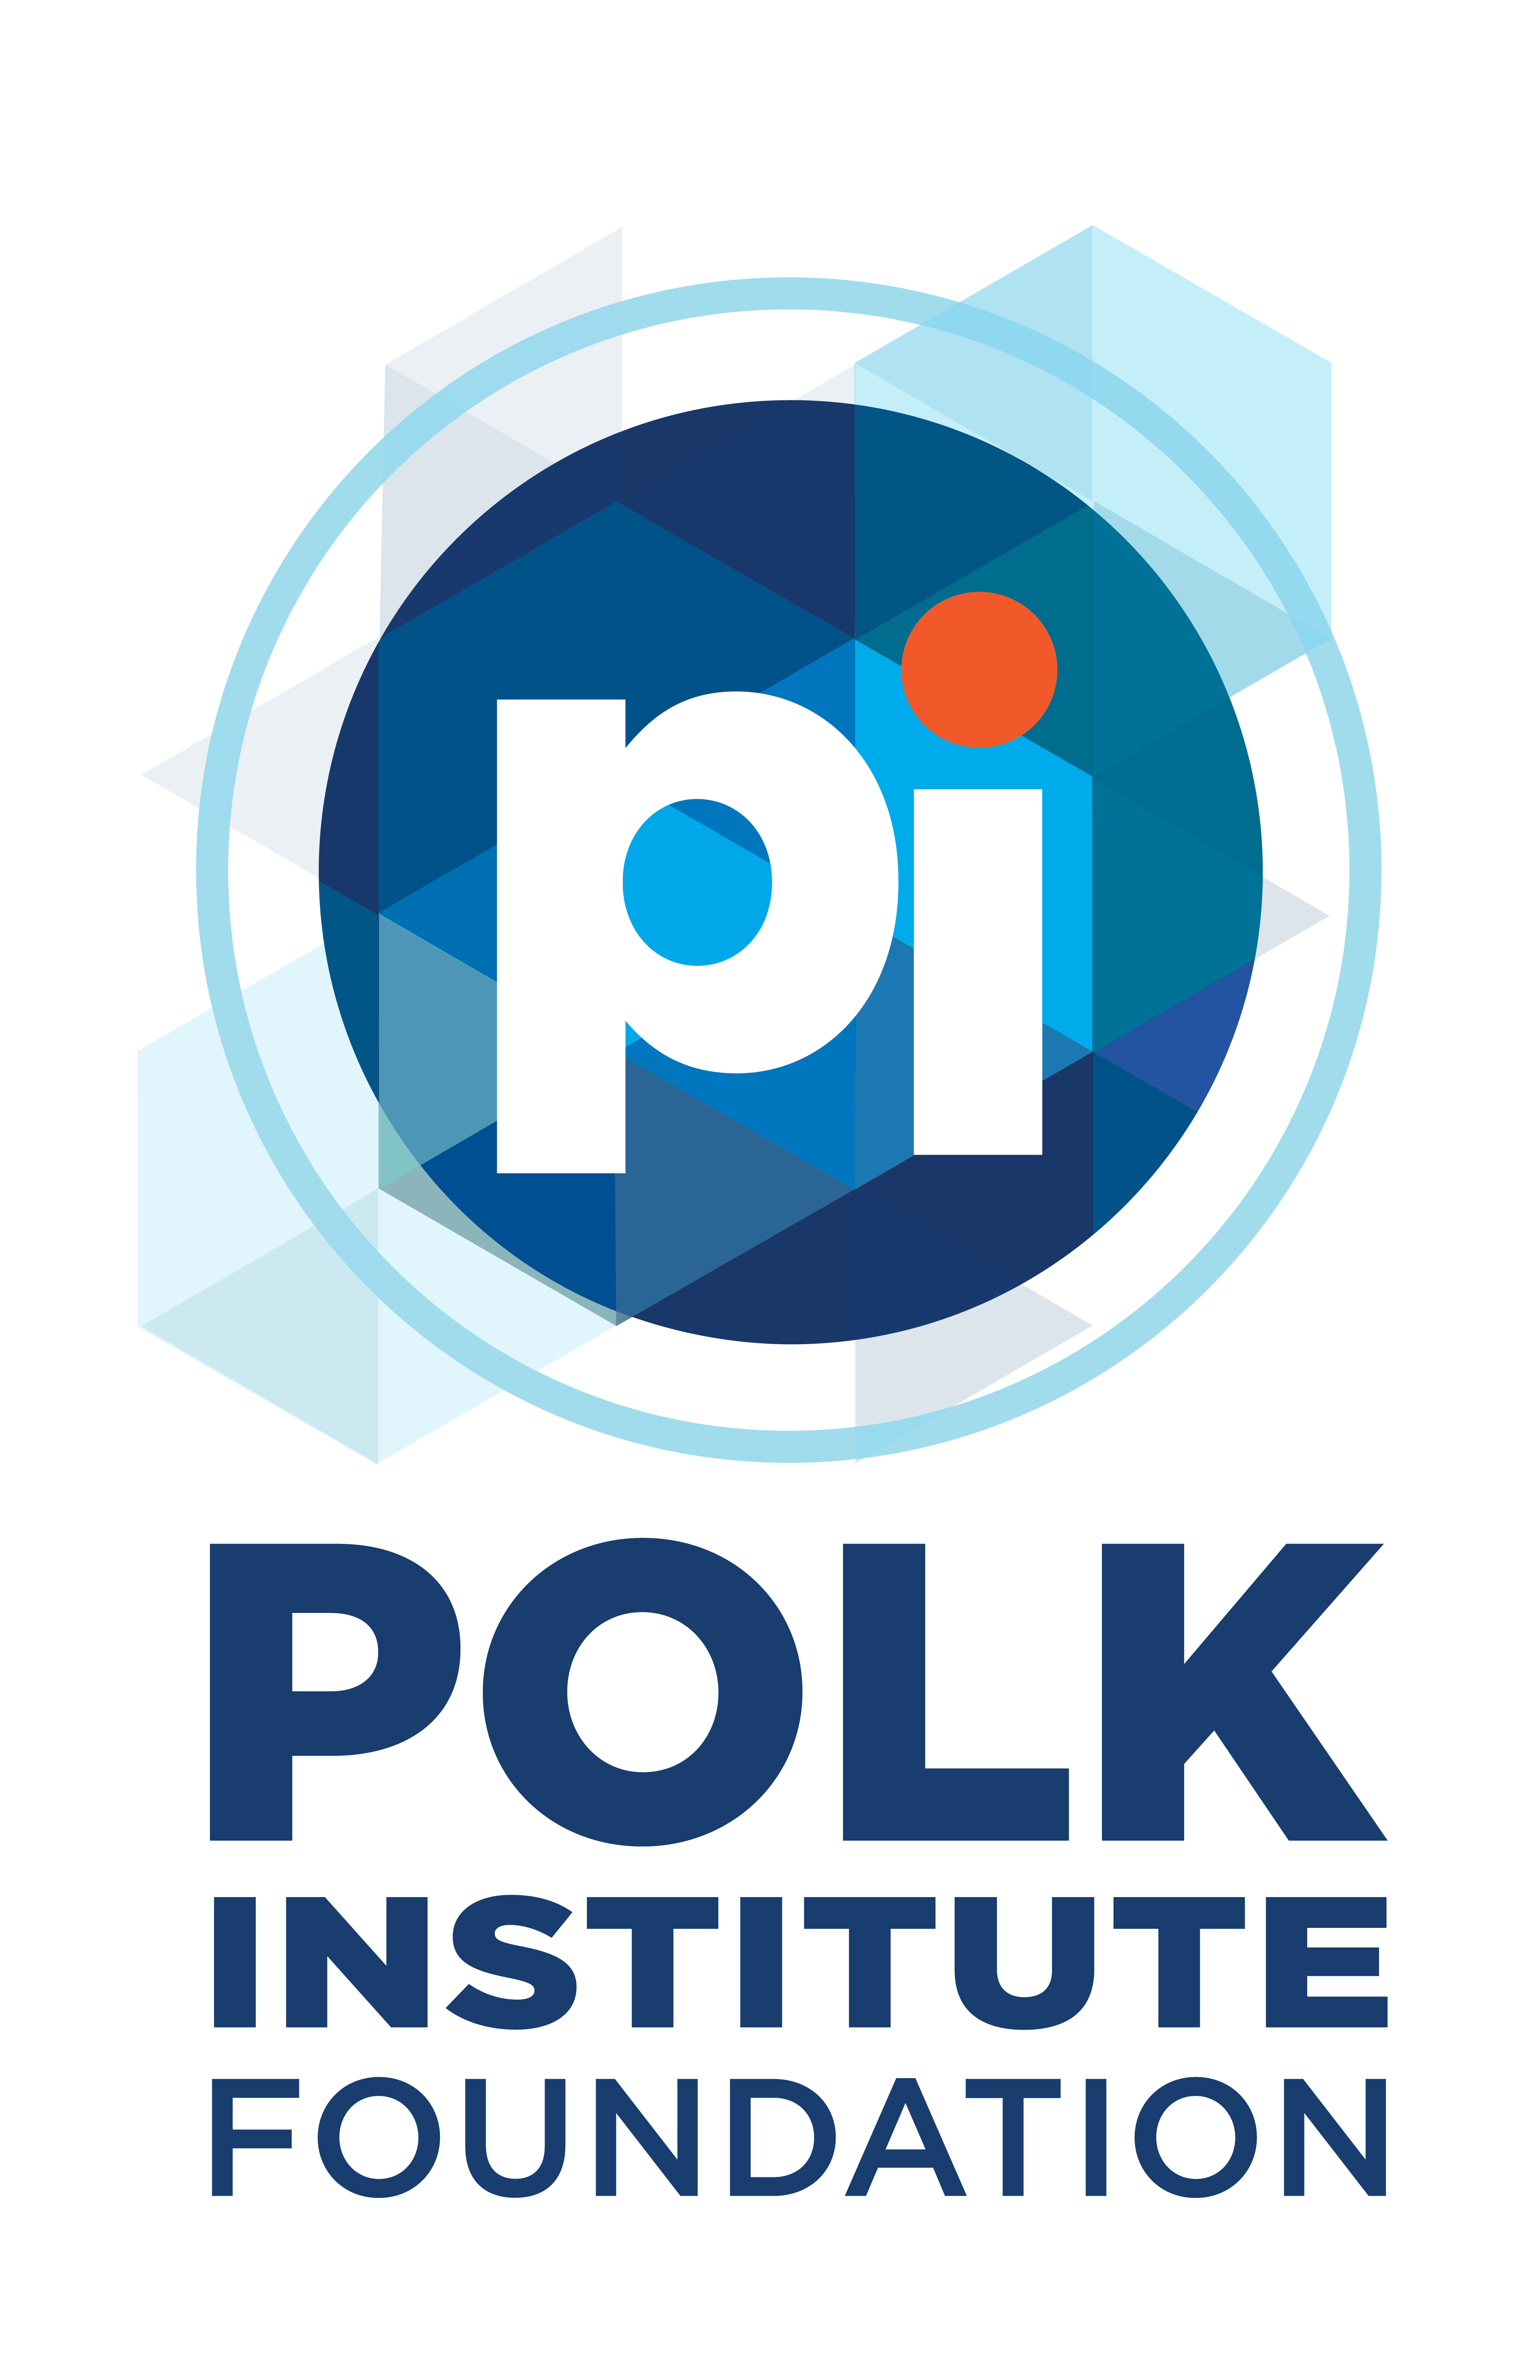 POLK Institute Foundation-01.png